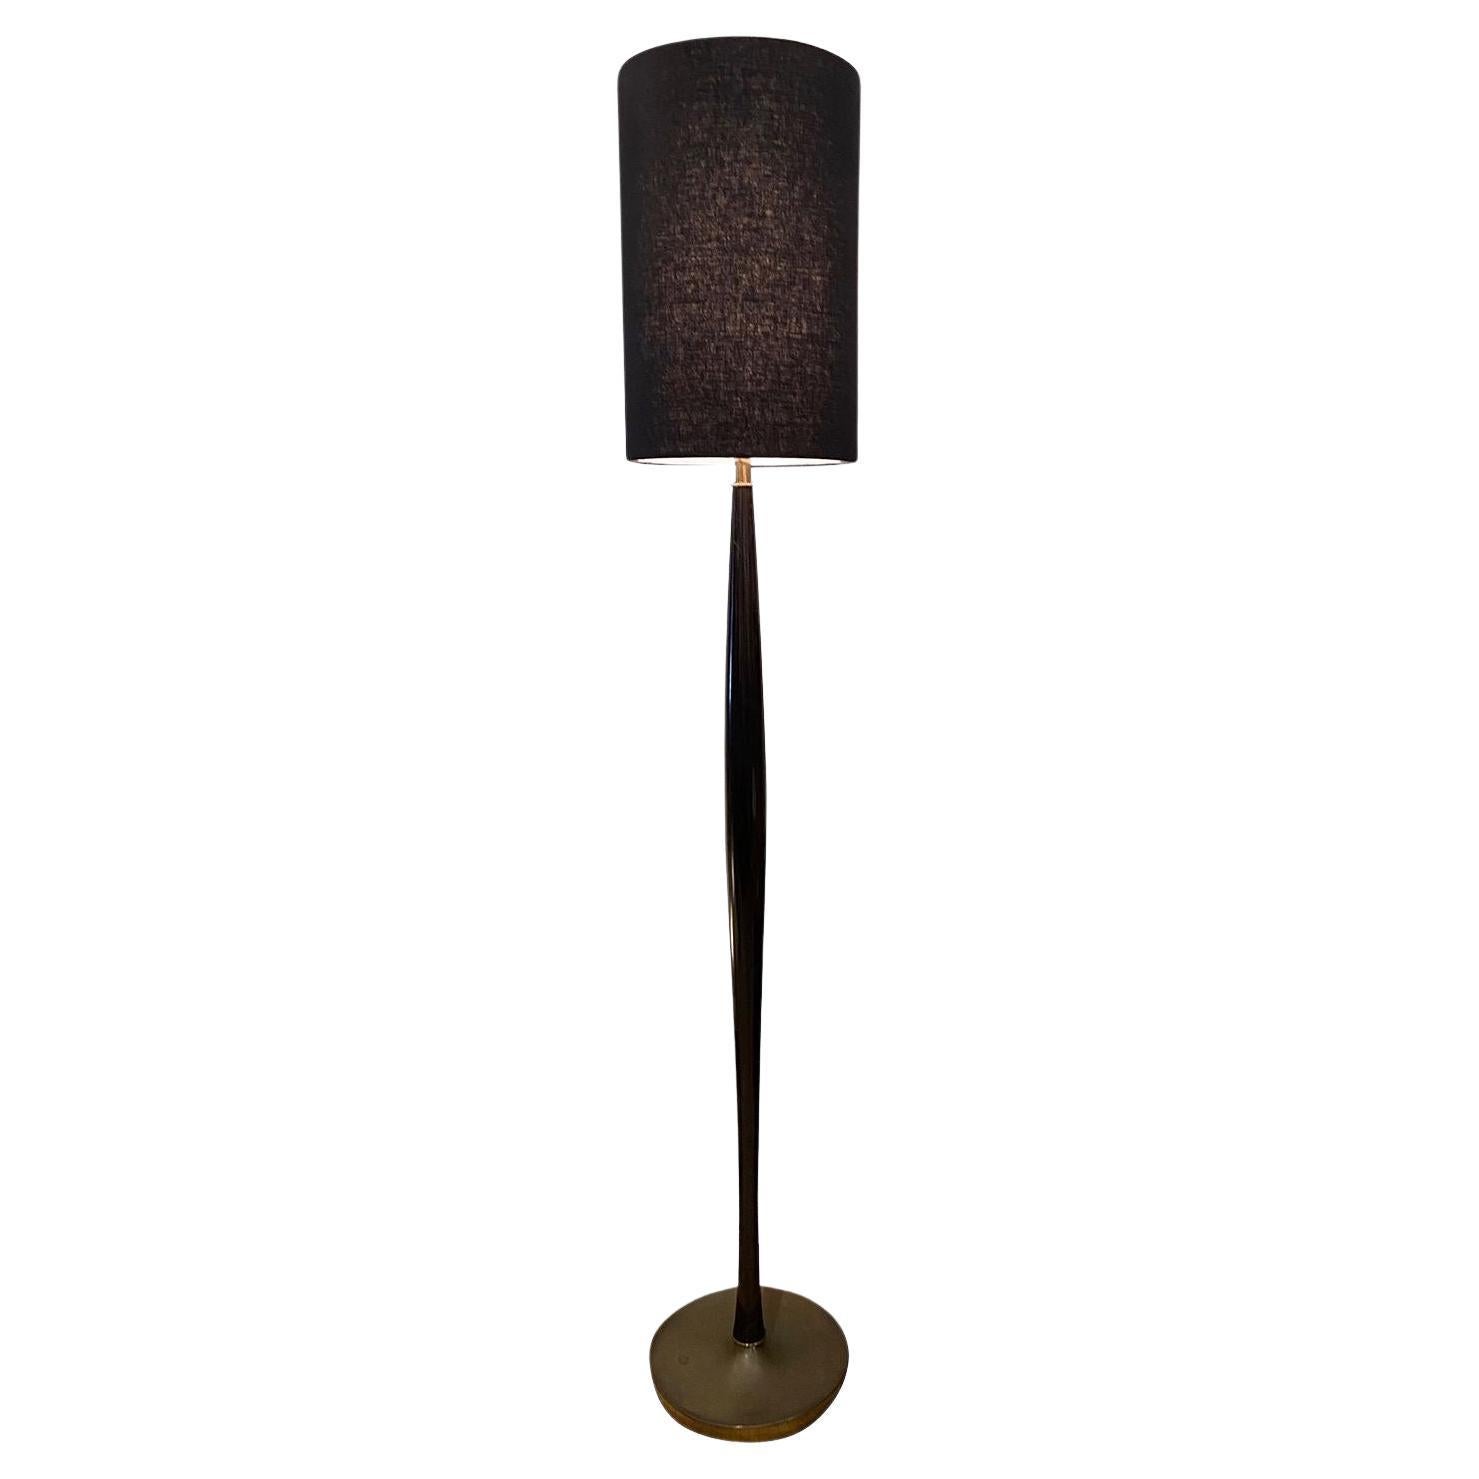 1950's Italian, Brass and Black Ebonised Wood Floor Lamp, Attributed to Stilnovo